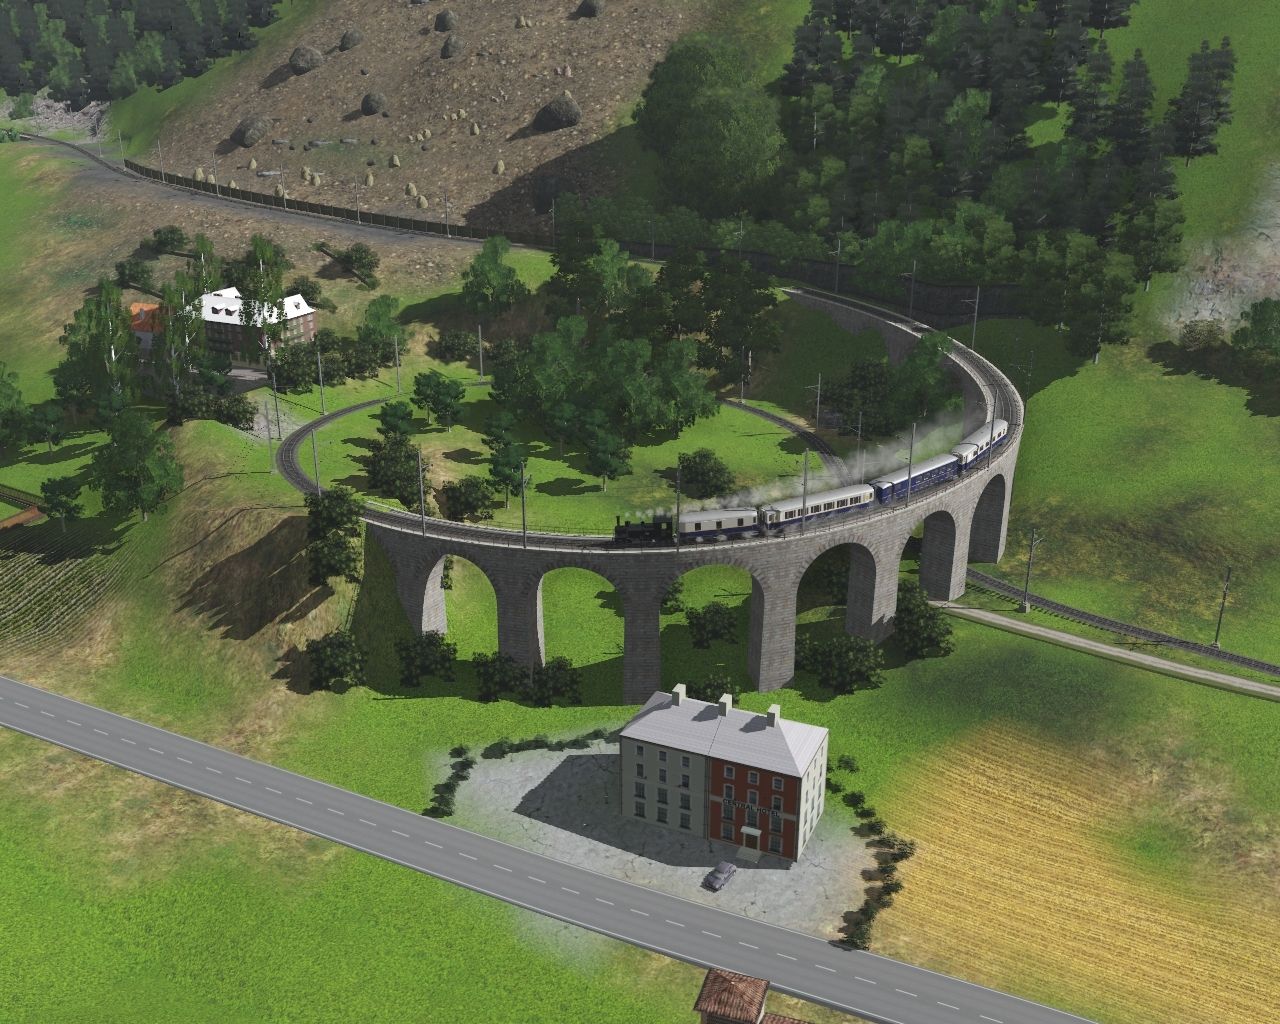 RhB-Thusis-with-a-train-at-the-Brusio-spiral-viaduct.jpg